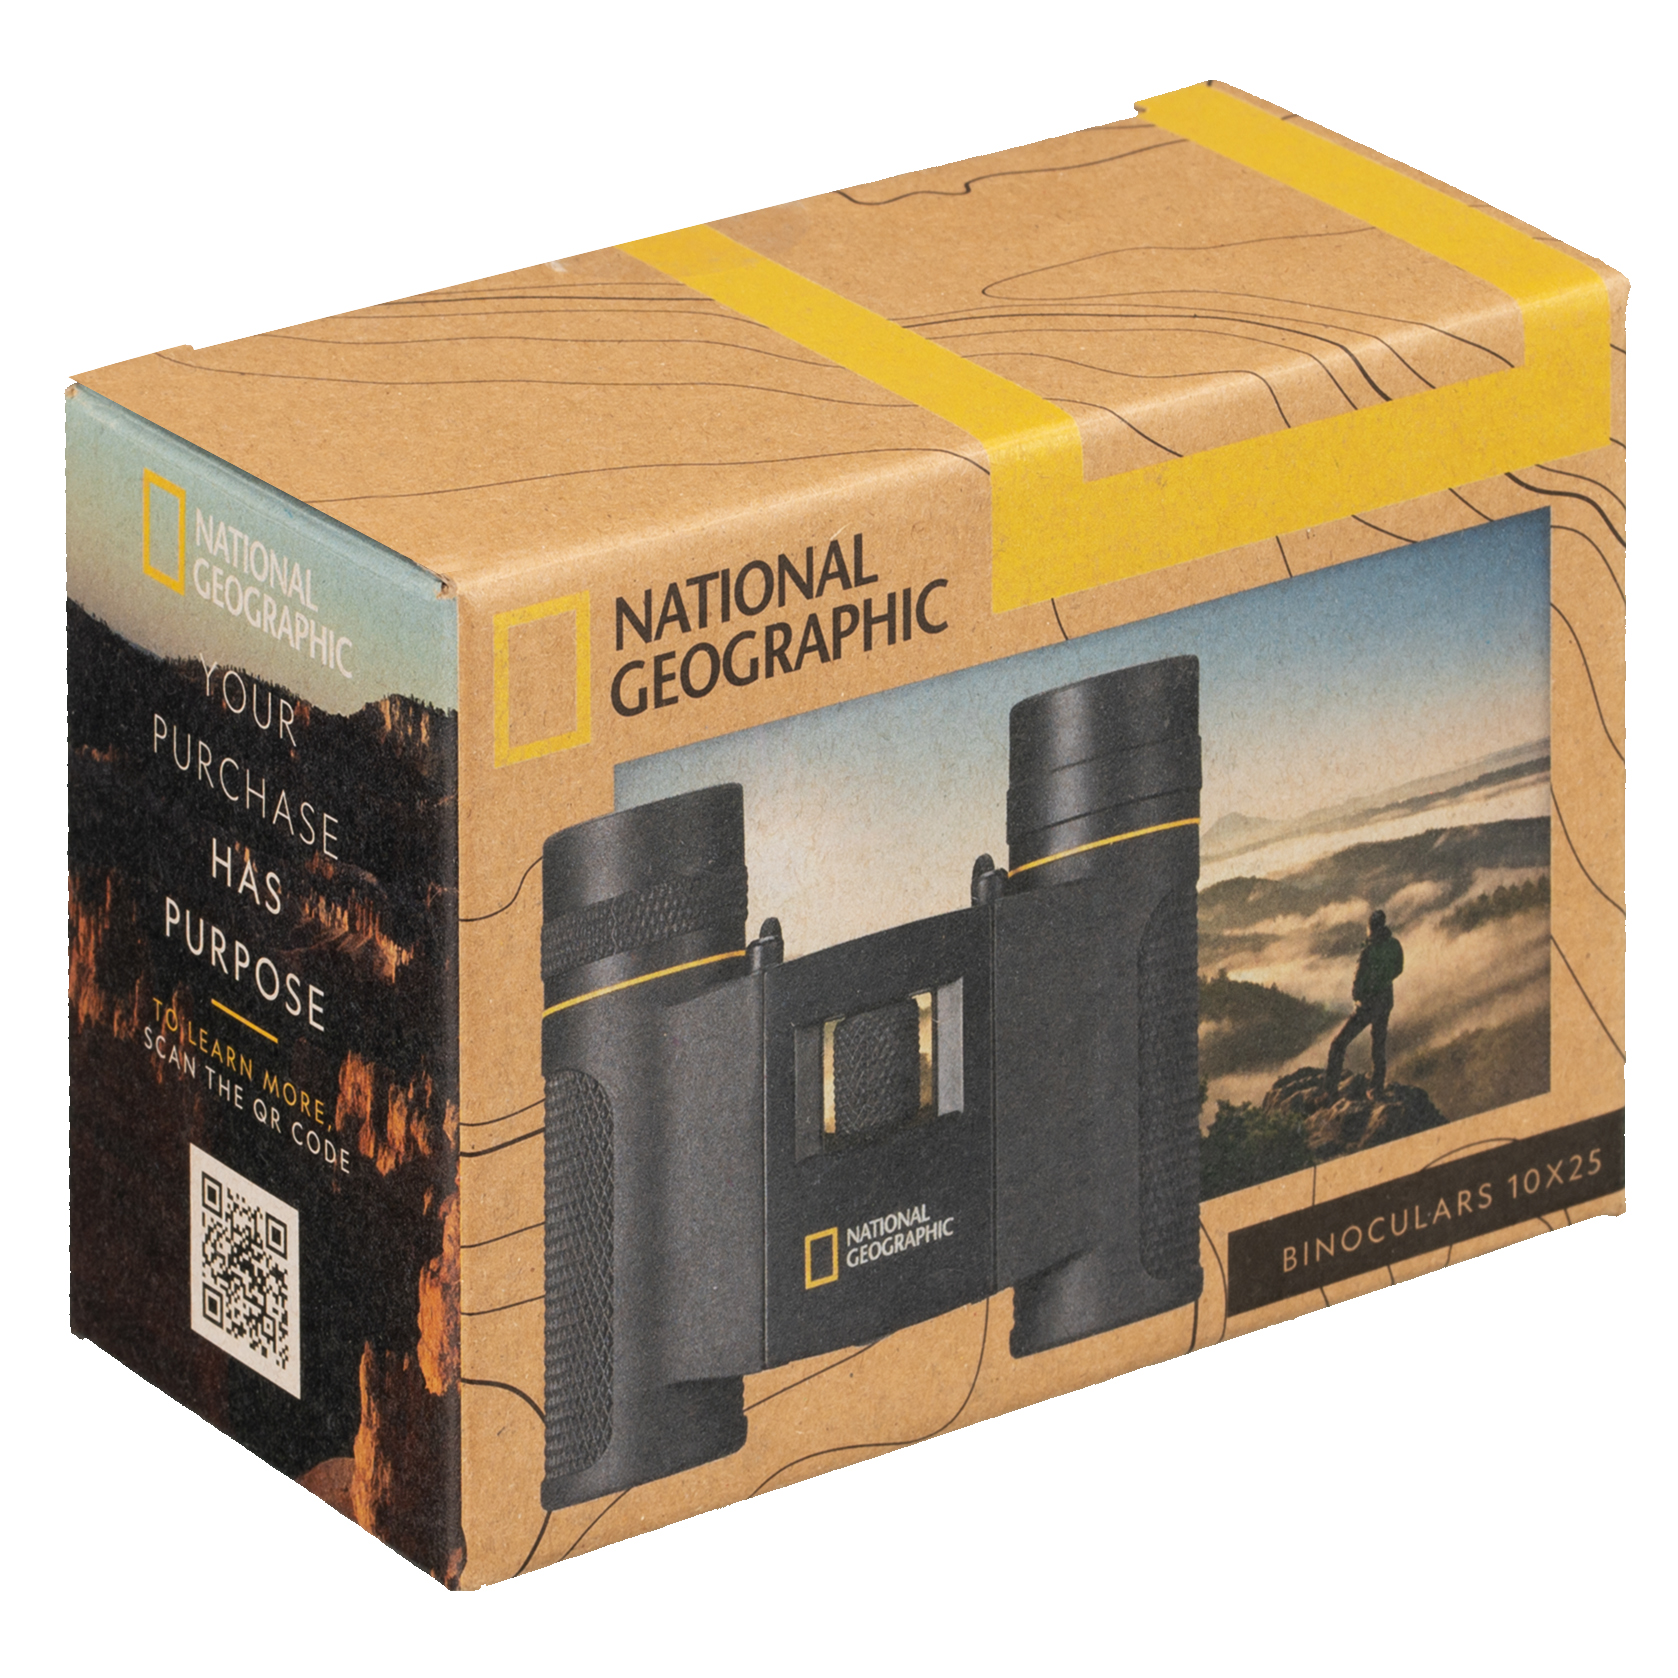 NATIONAL GEOGRAPHIC 10x25 pocket binoculars